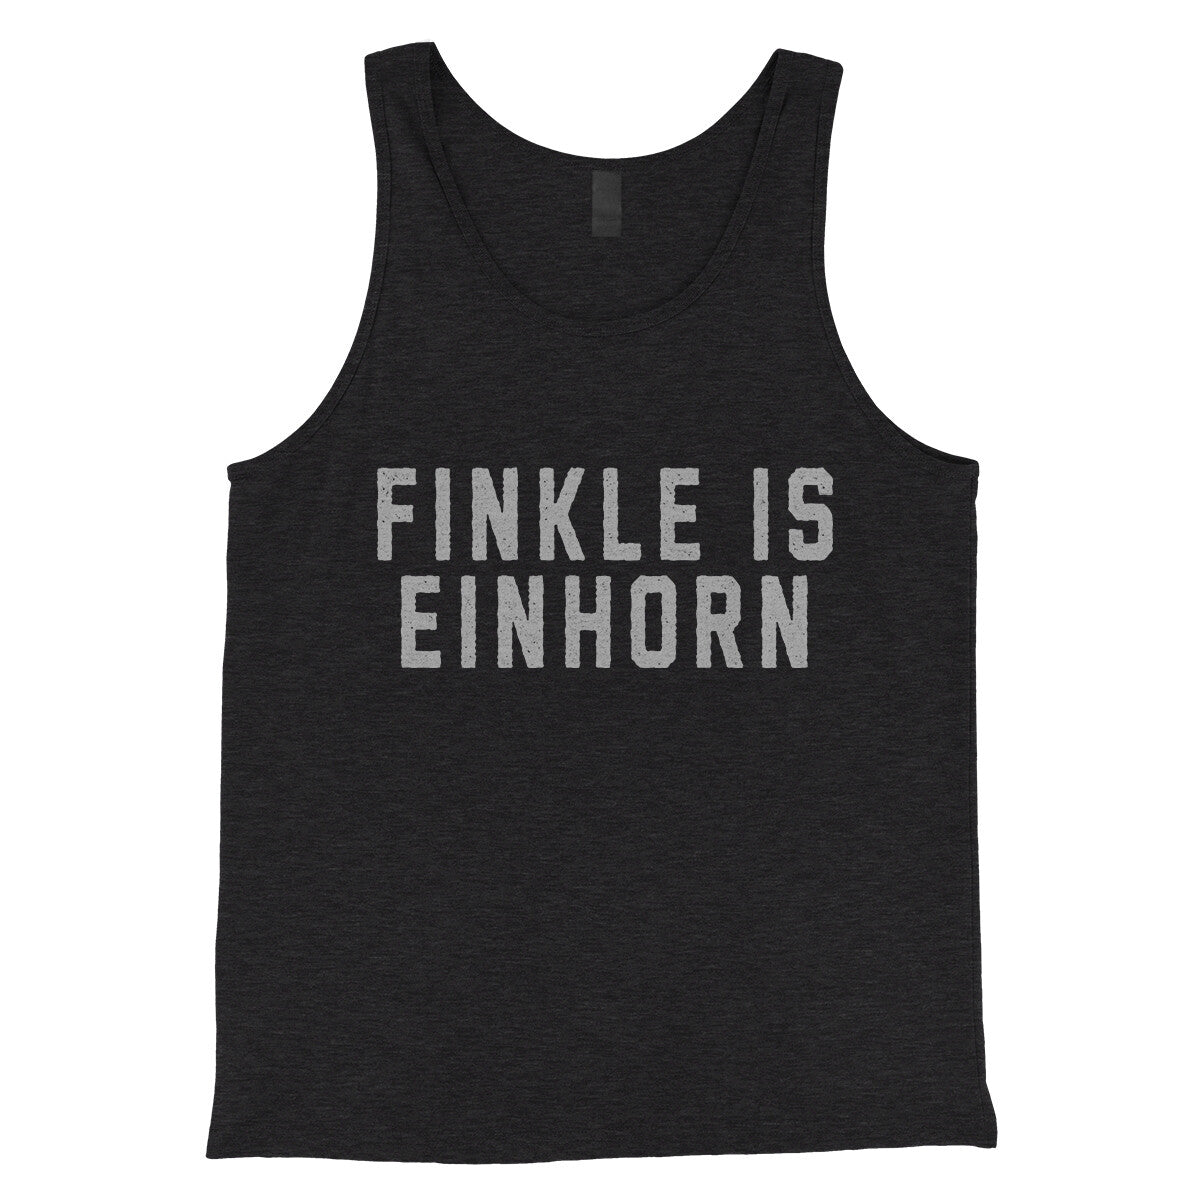 Finkle is Einhorn in Charcoal Black TriBlend Color